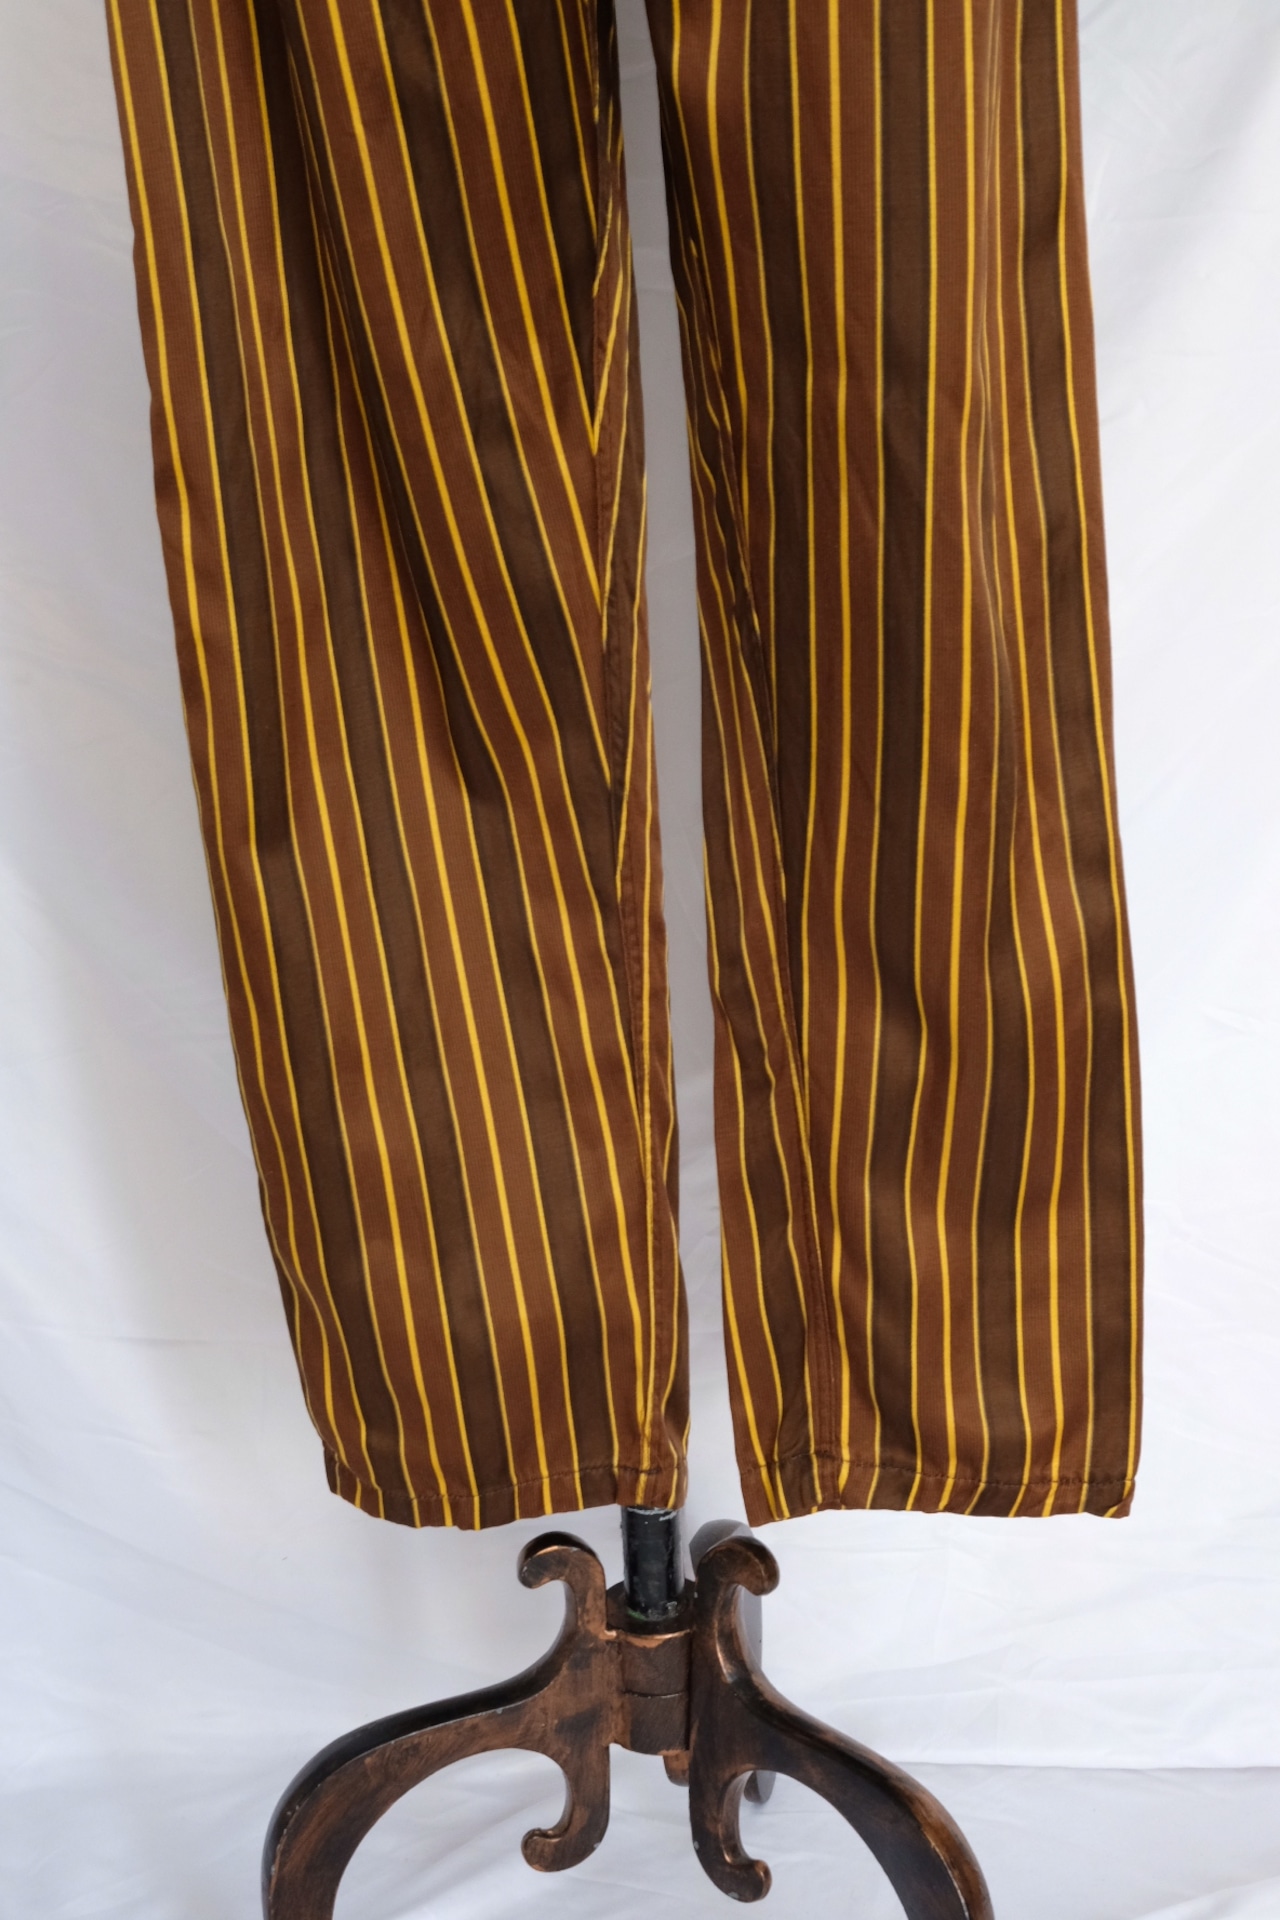 Stripe pattern easy pants